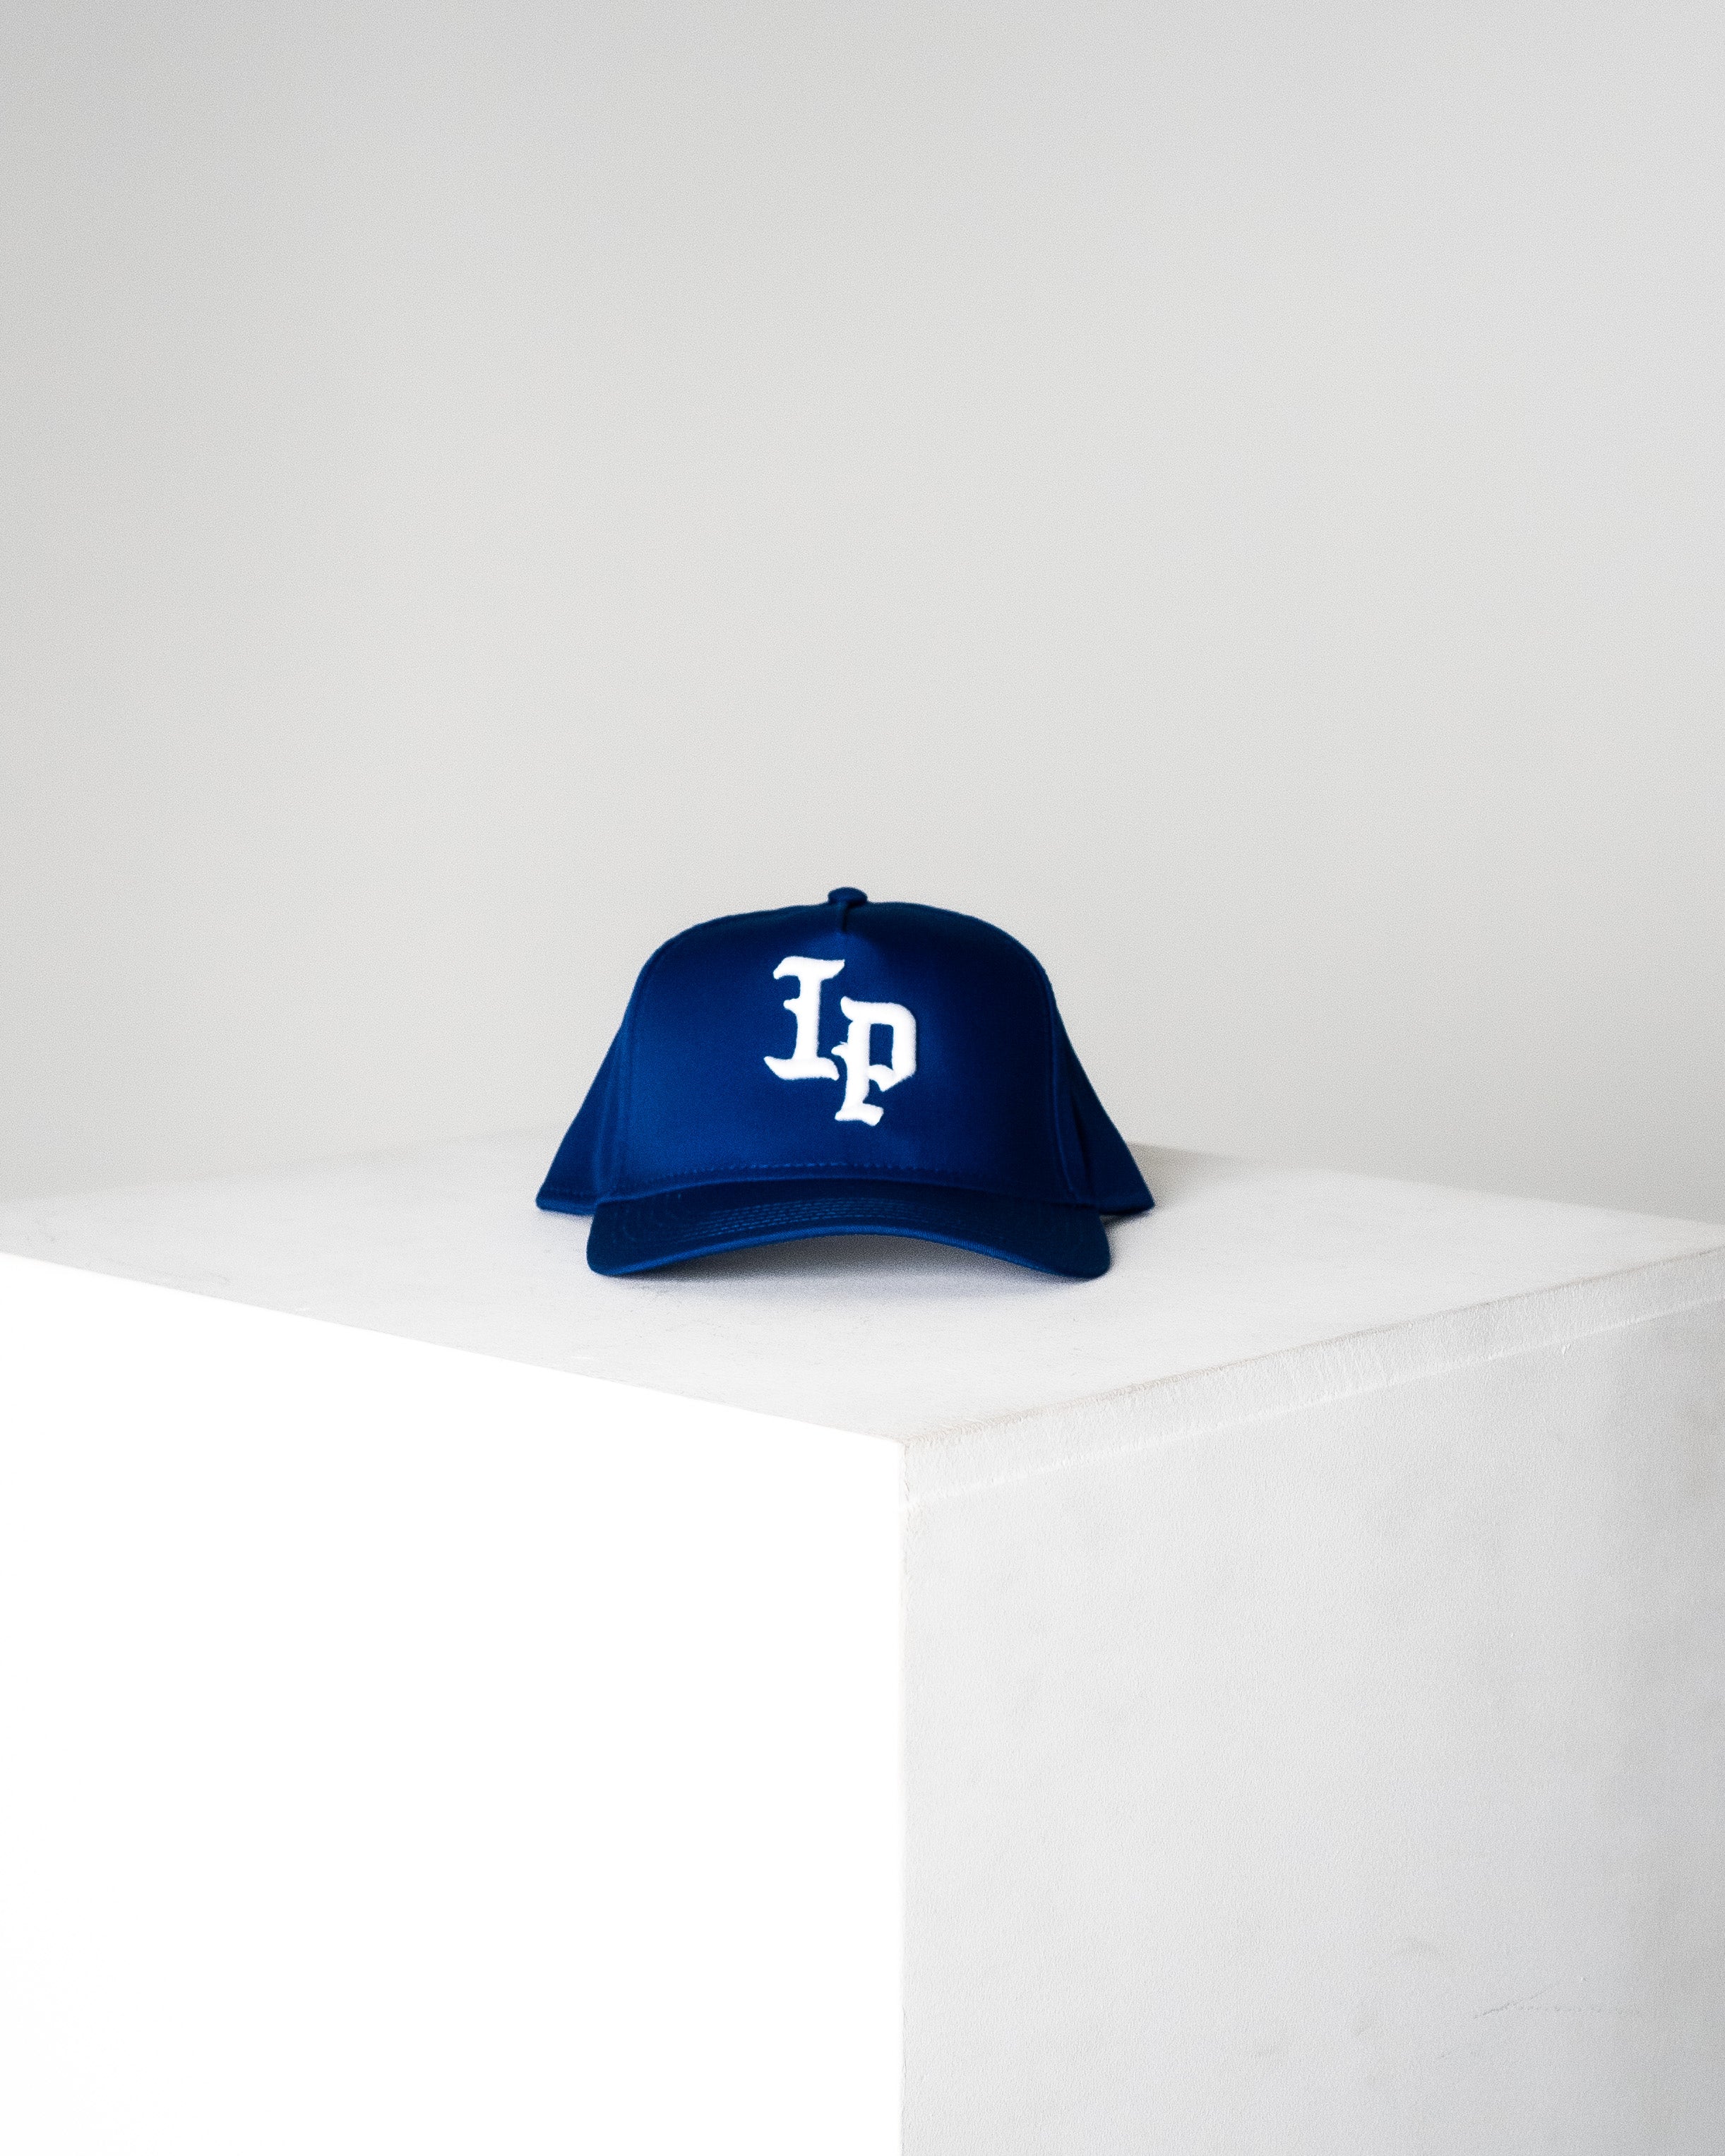 IP Hat - Royal Blue